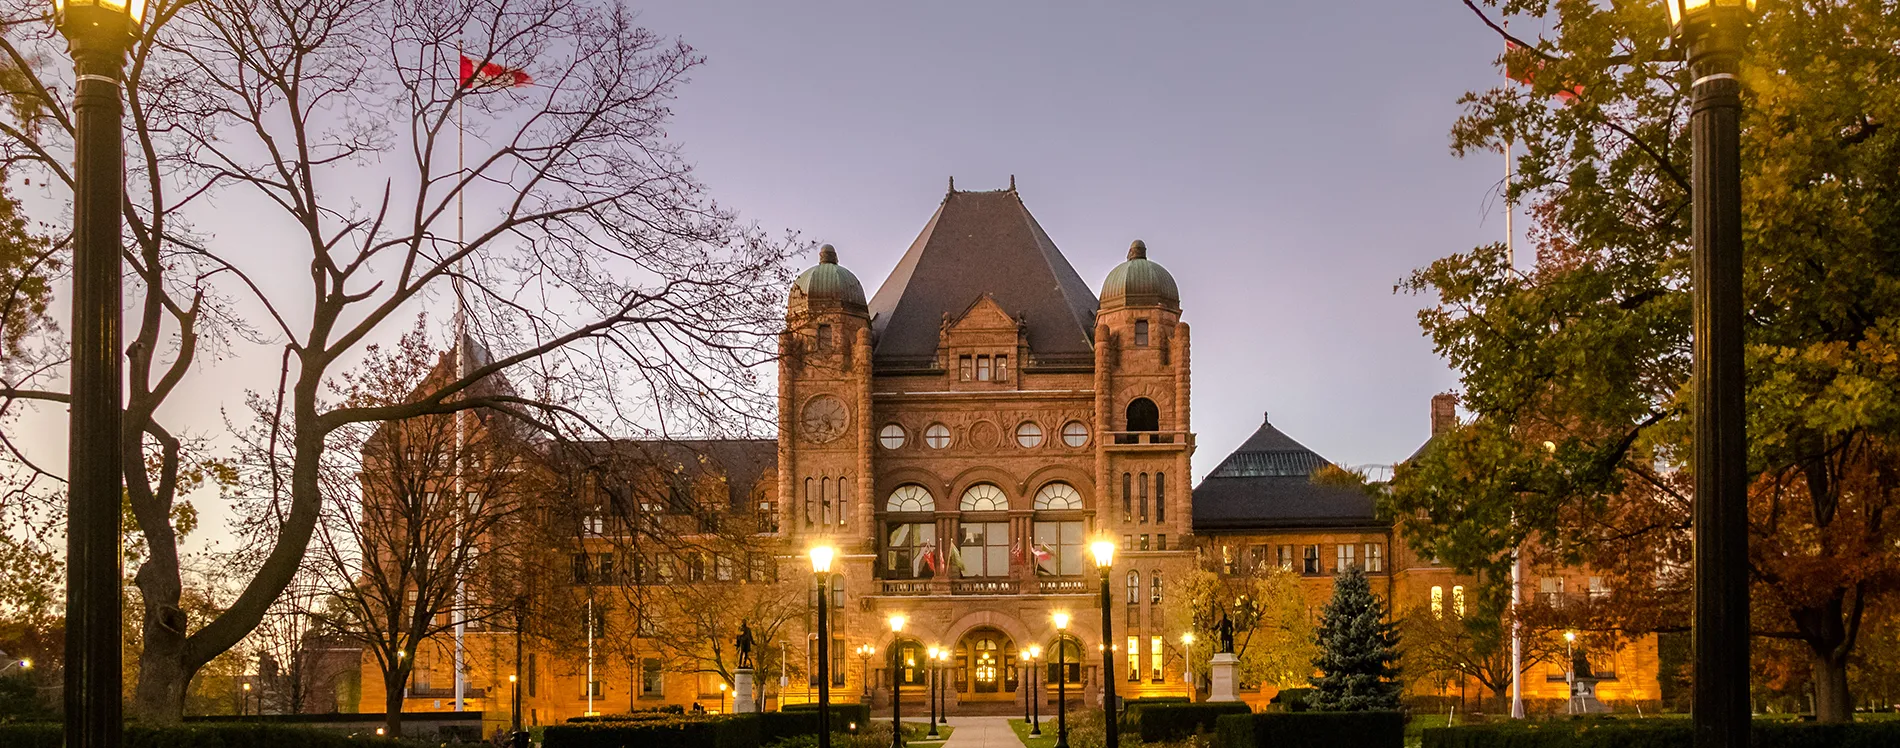 Parliament building in Ontario